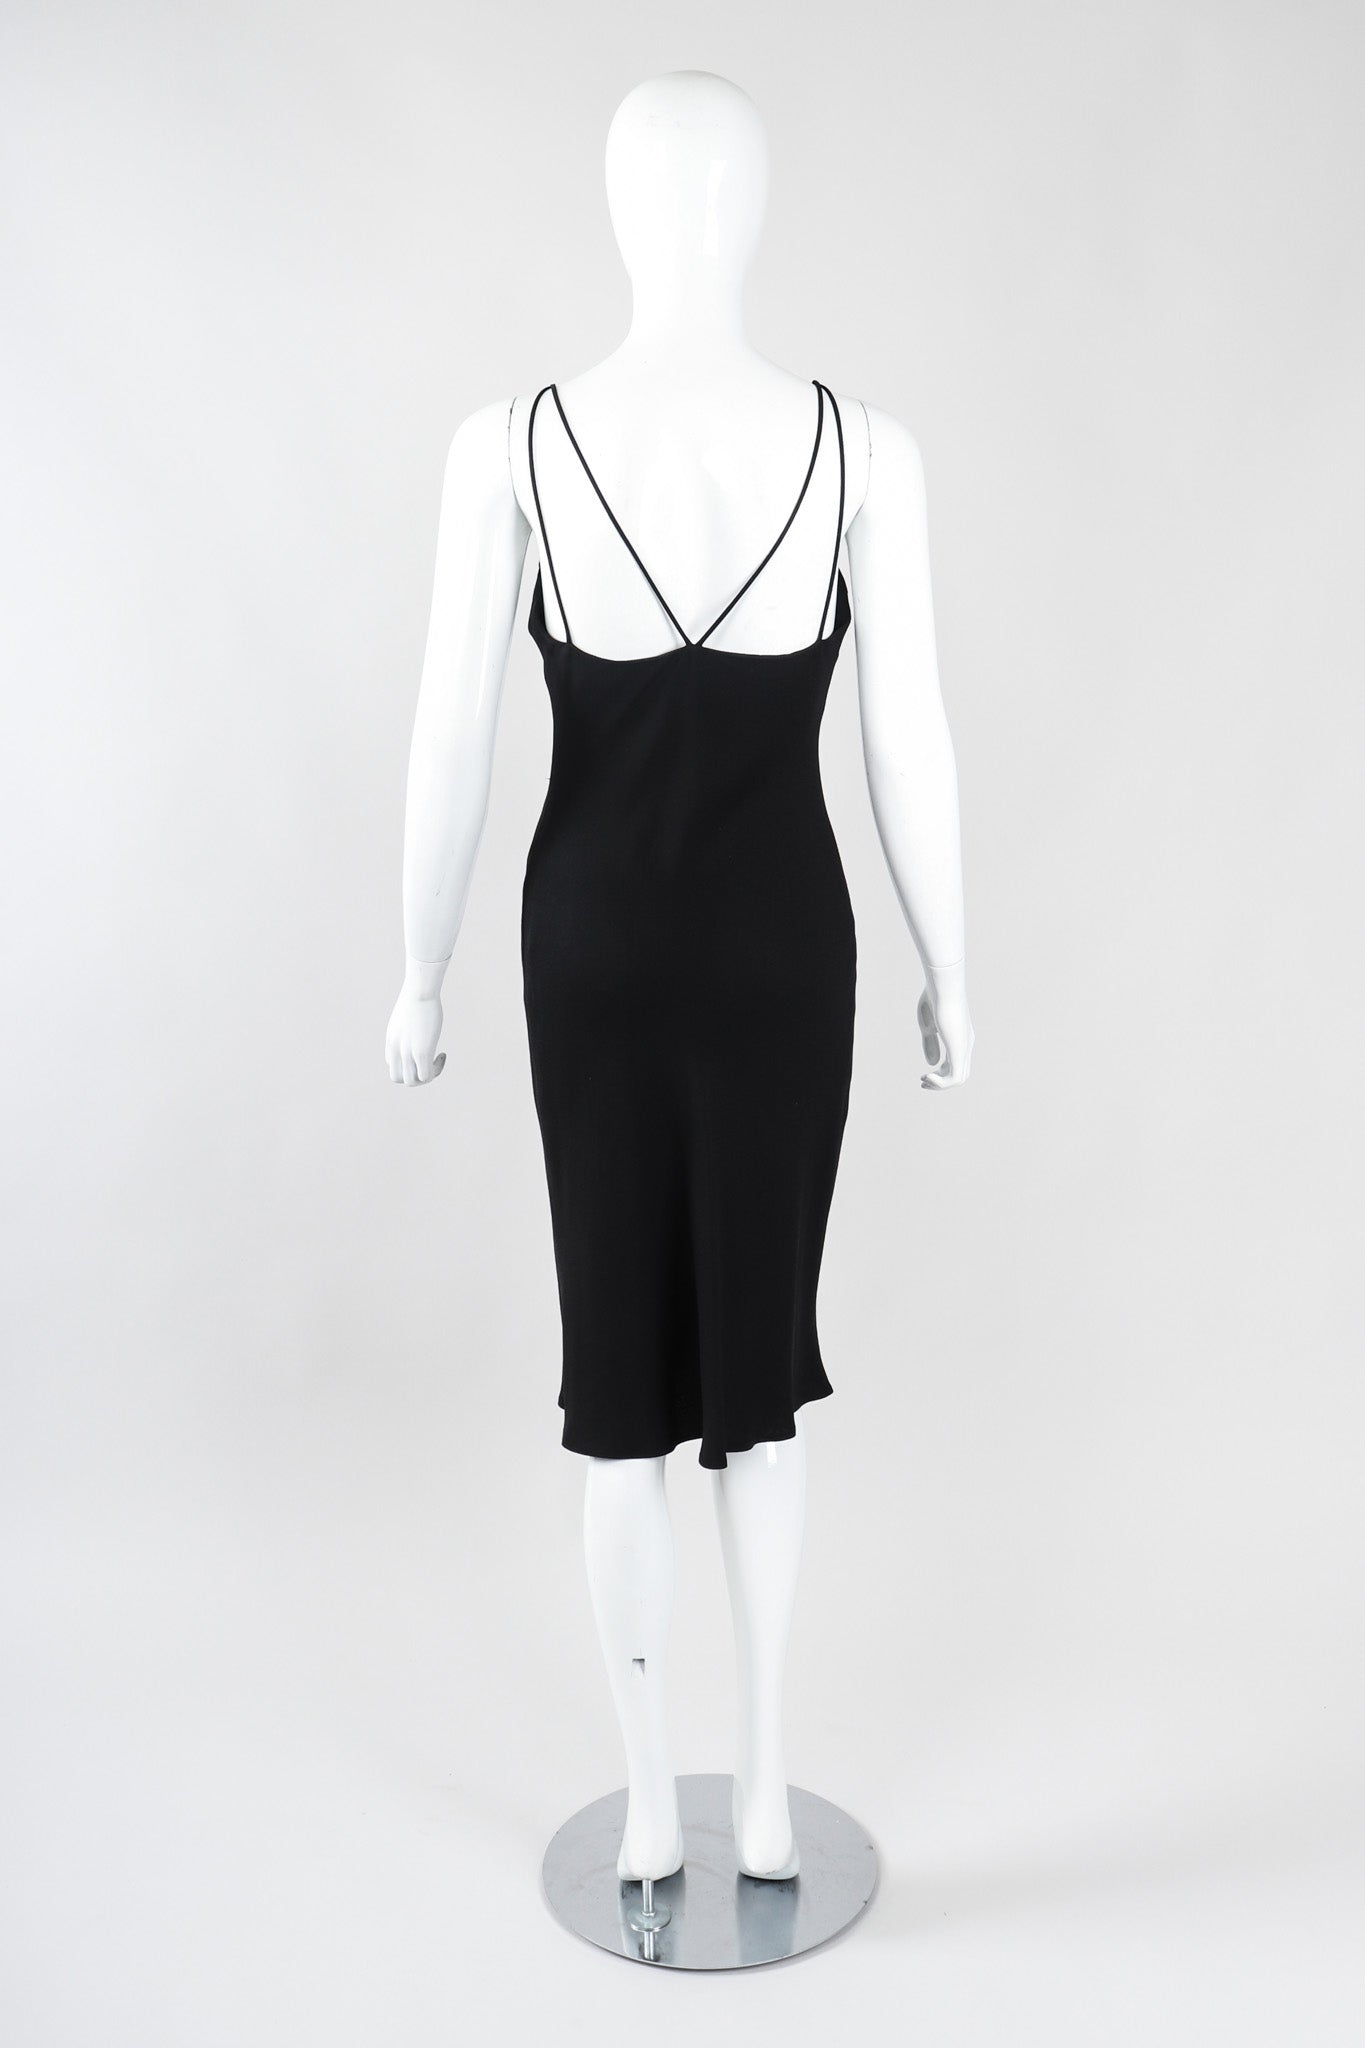 Recess Los Angeles Vintage Jasper Conran Strappy Minimal 90s Slip Dress